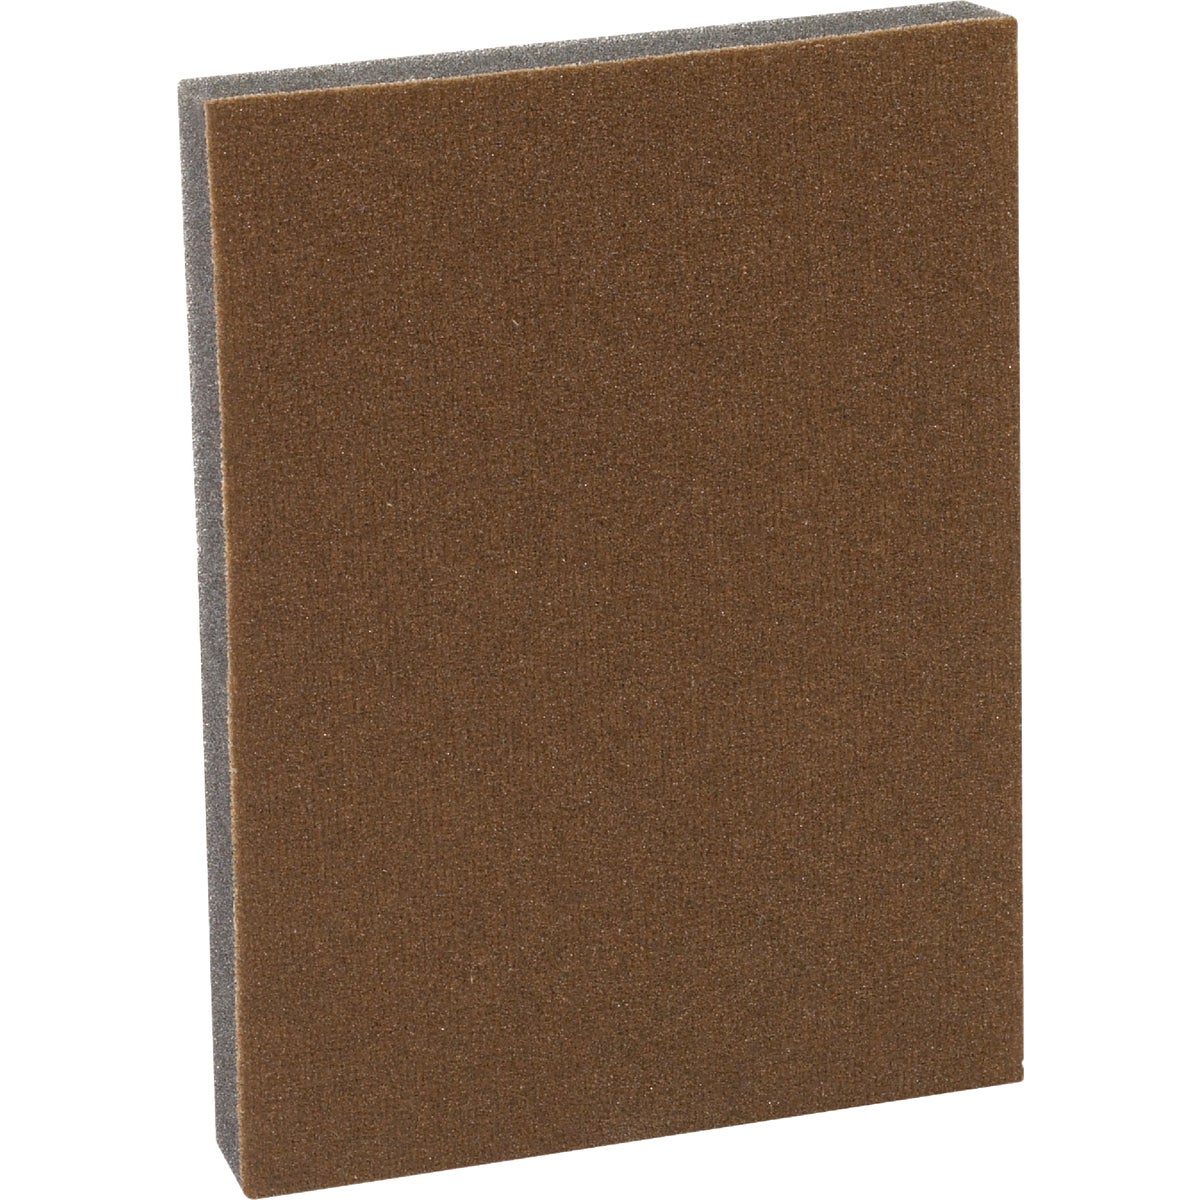 3M Pro-Pad 2.88 In. x 4 In. x 0.5 In. 150 Grit Fine Sanding Sponge (54-Pack)